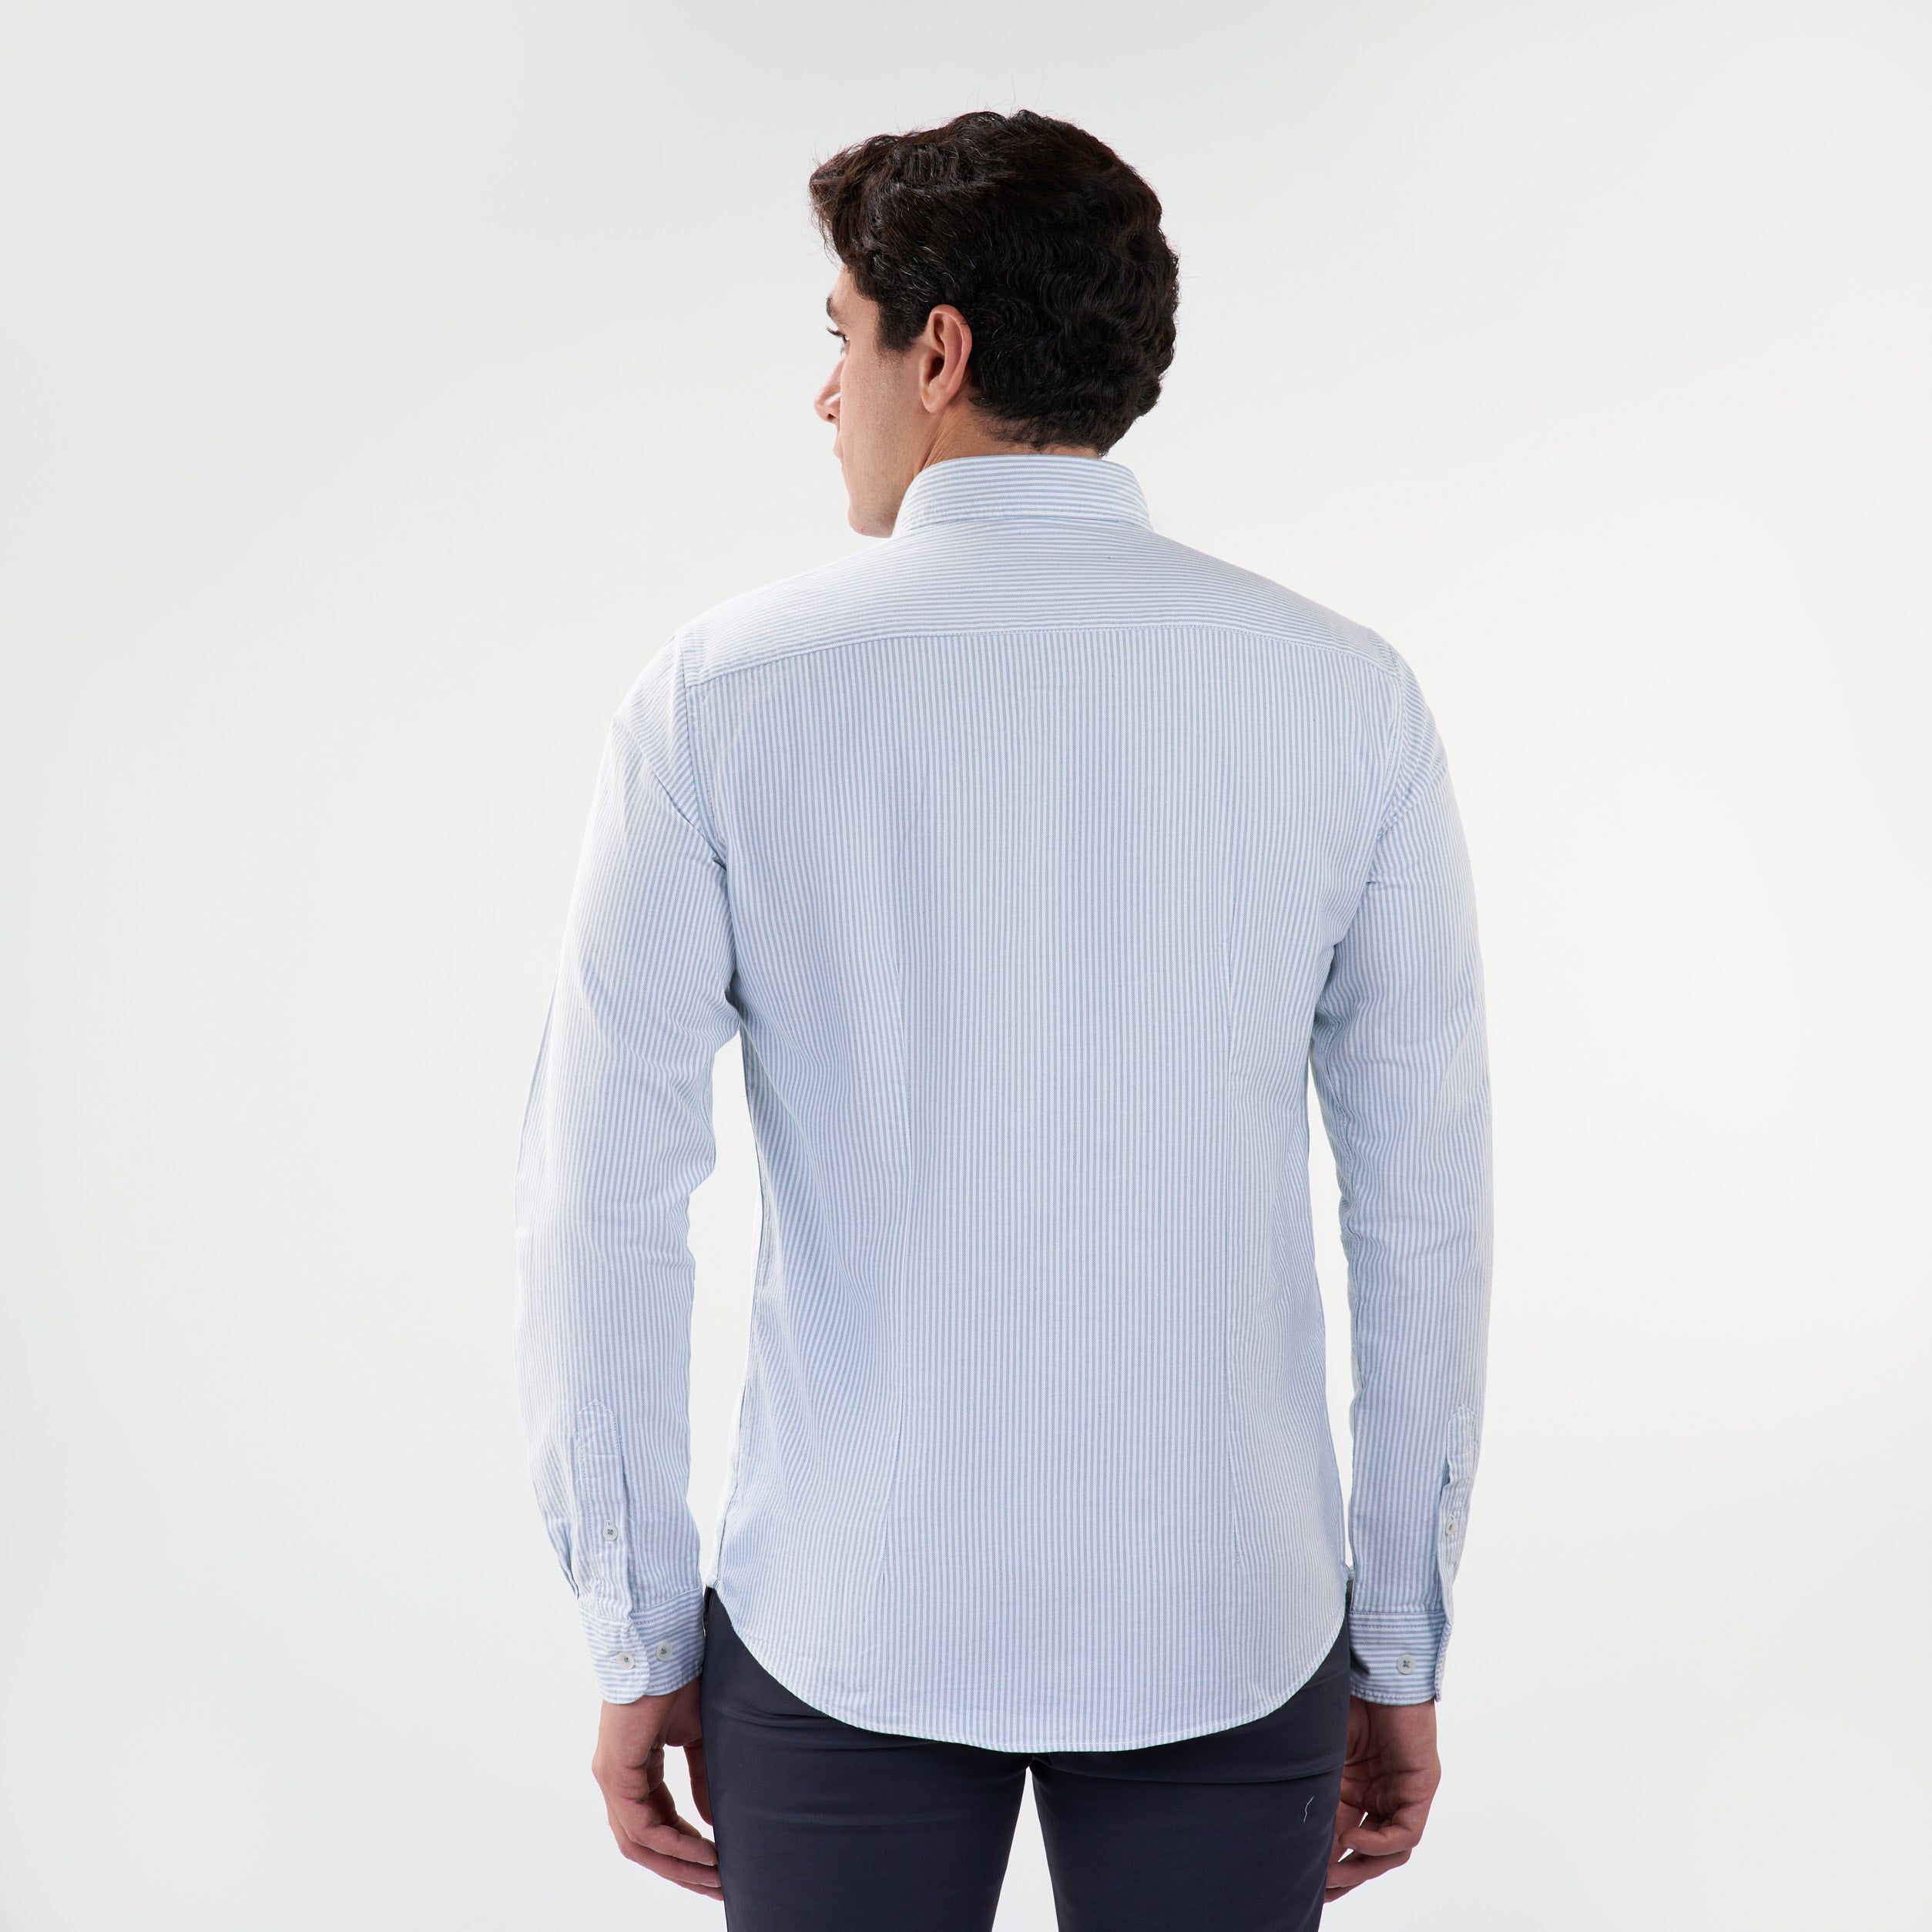 Grey*White Casual Shirt (854)